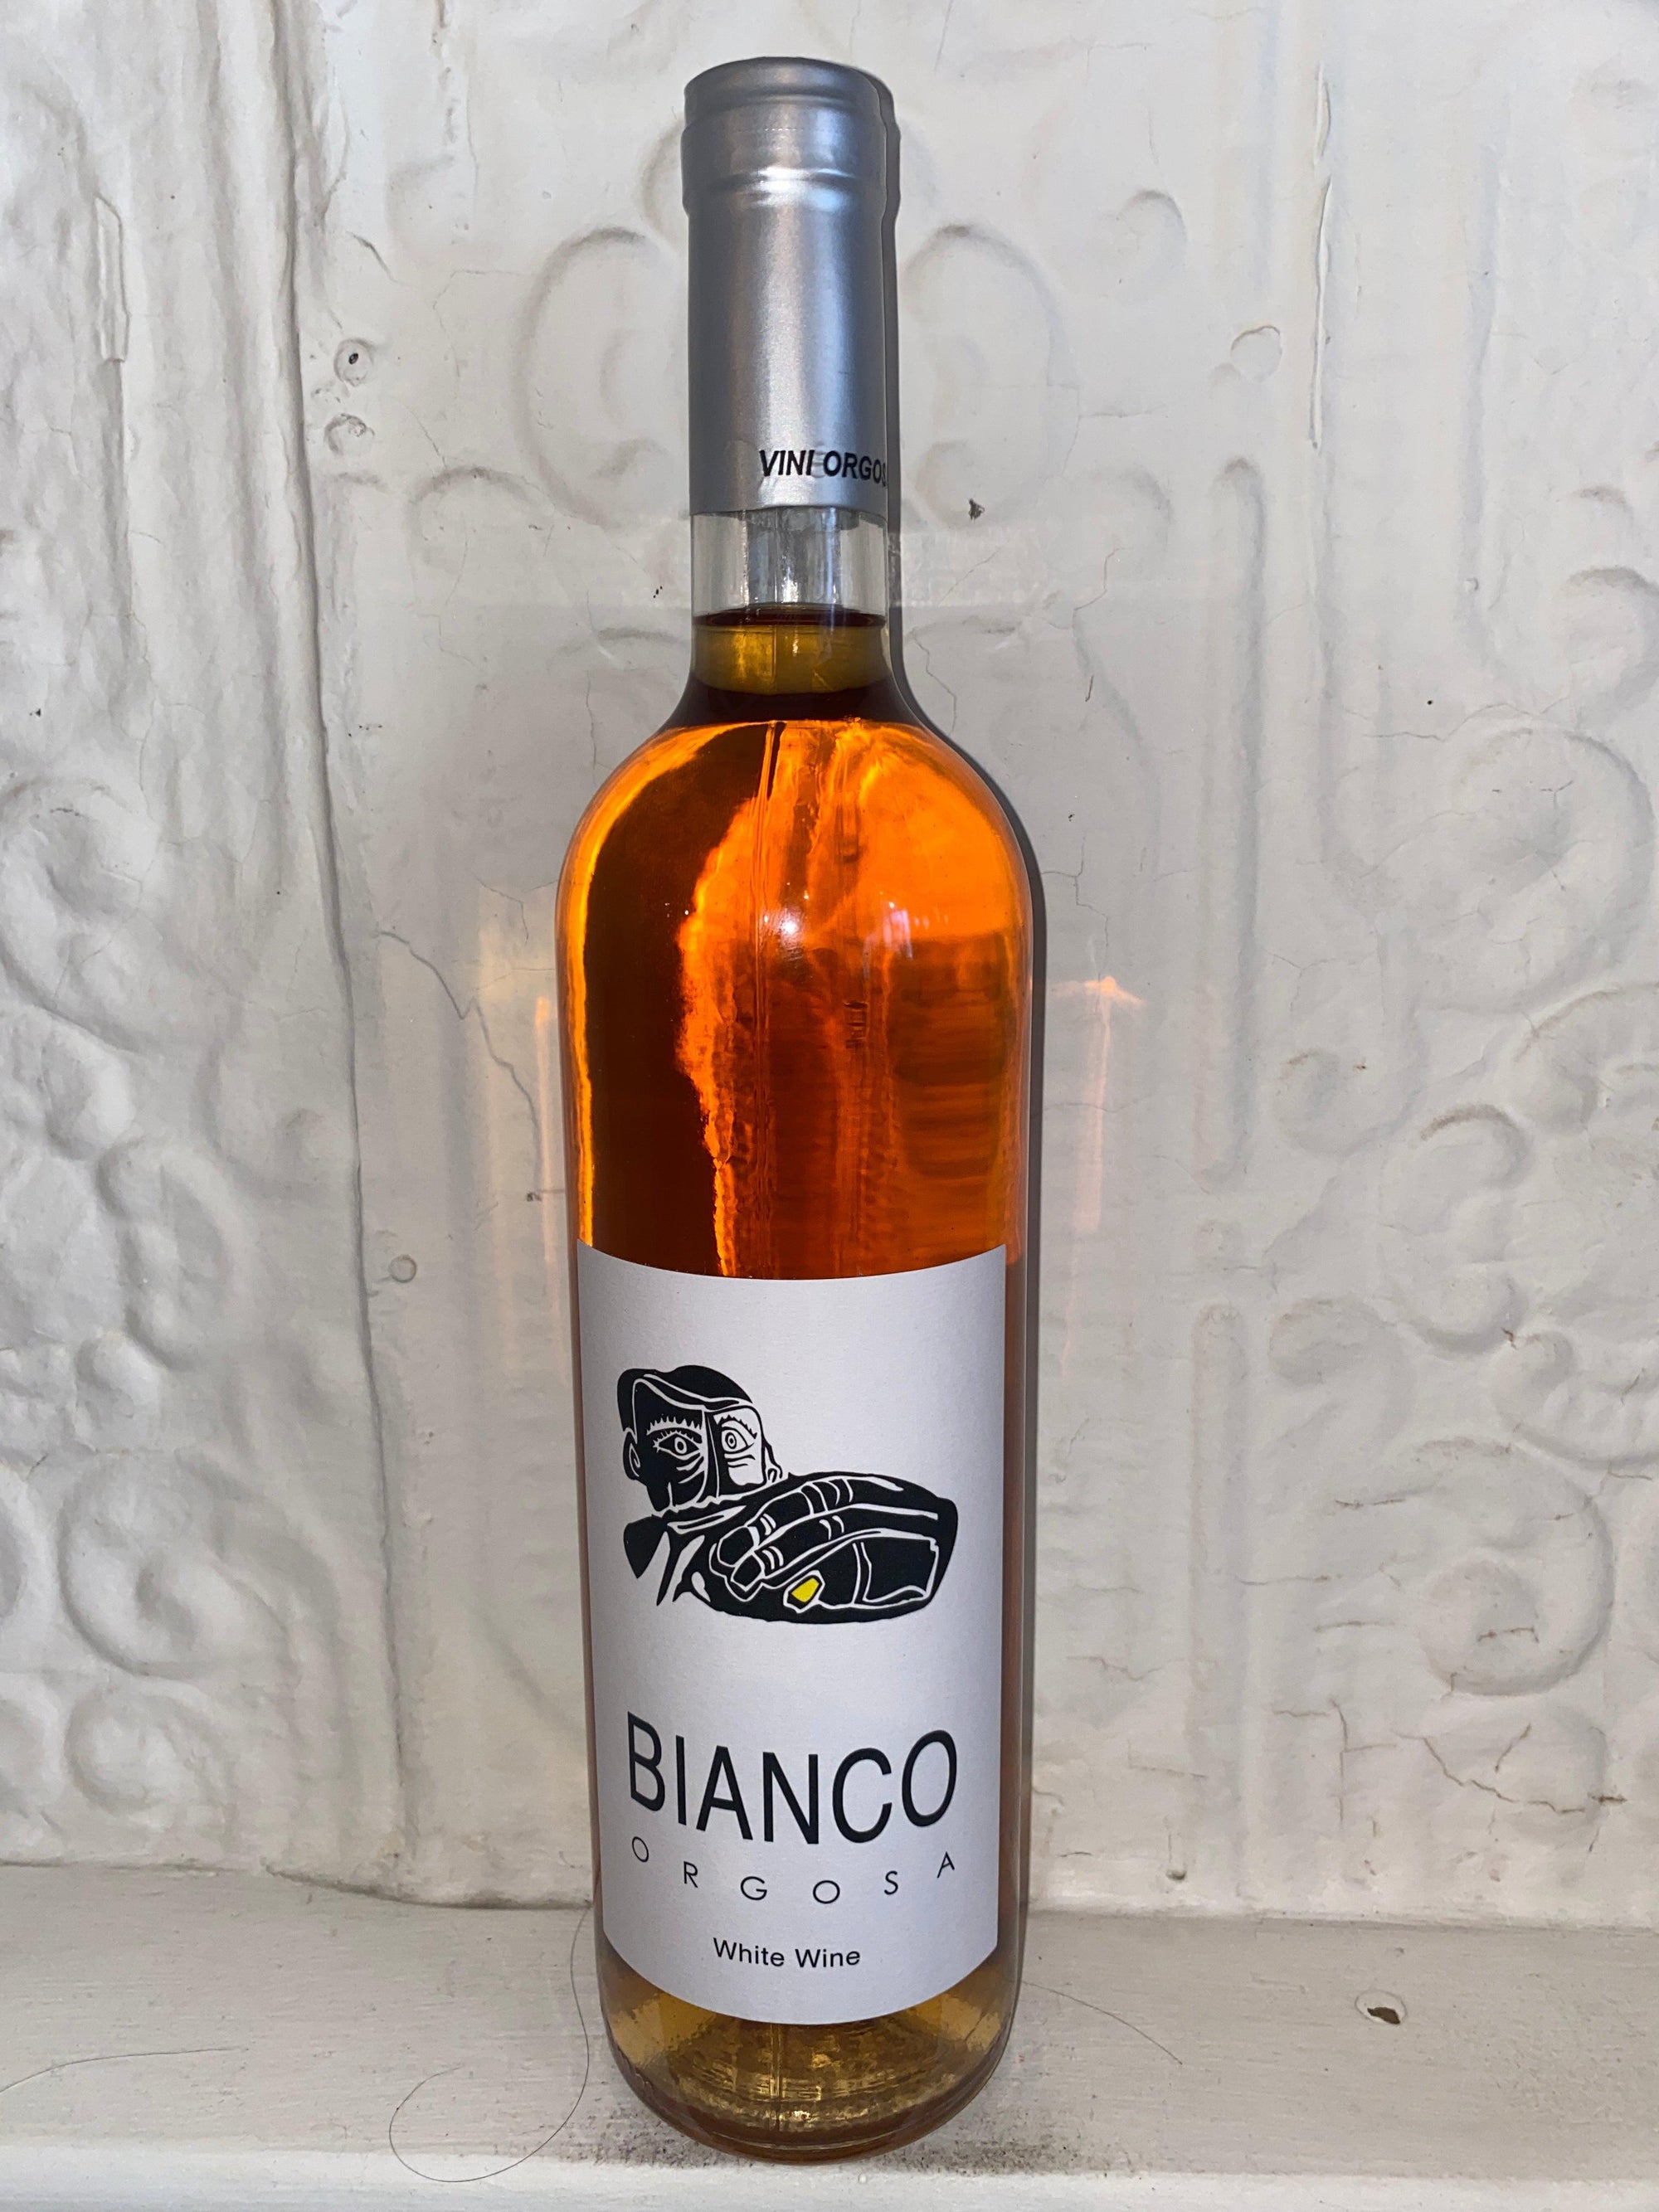 Bianco, Orgosa 2019 (Sardinia, Italy)-Wine-Bibber & Bell